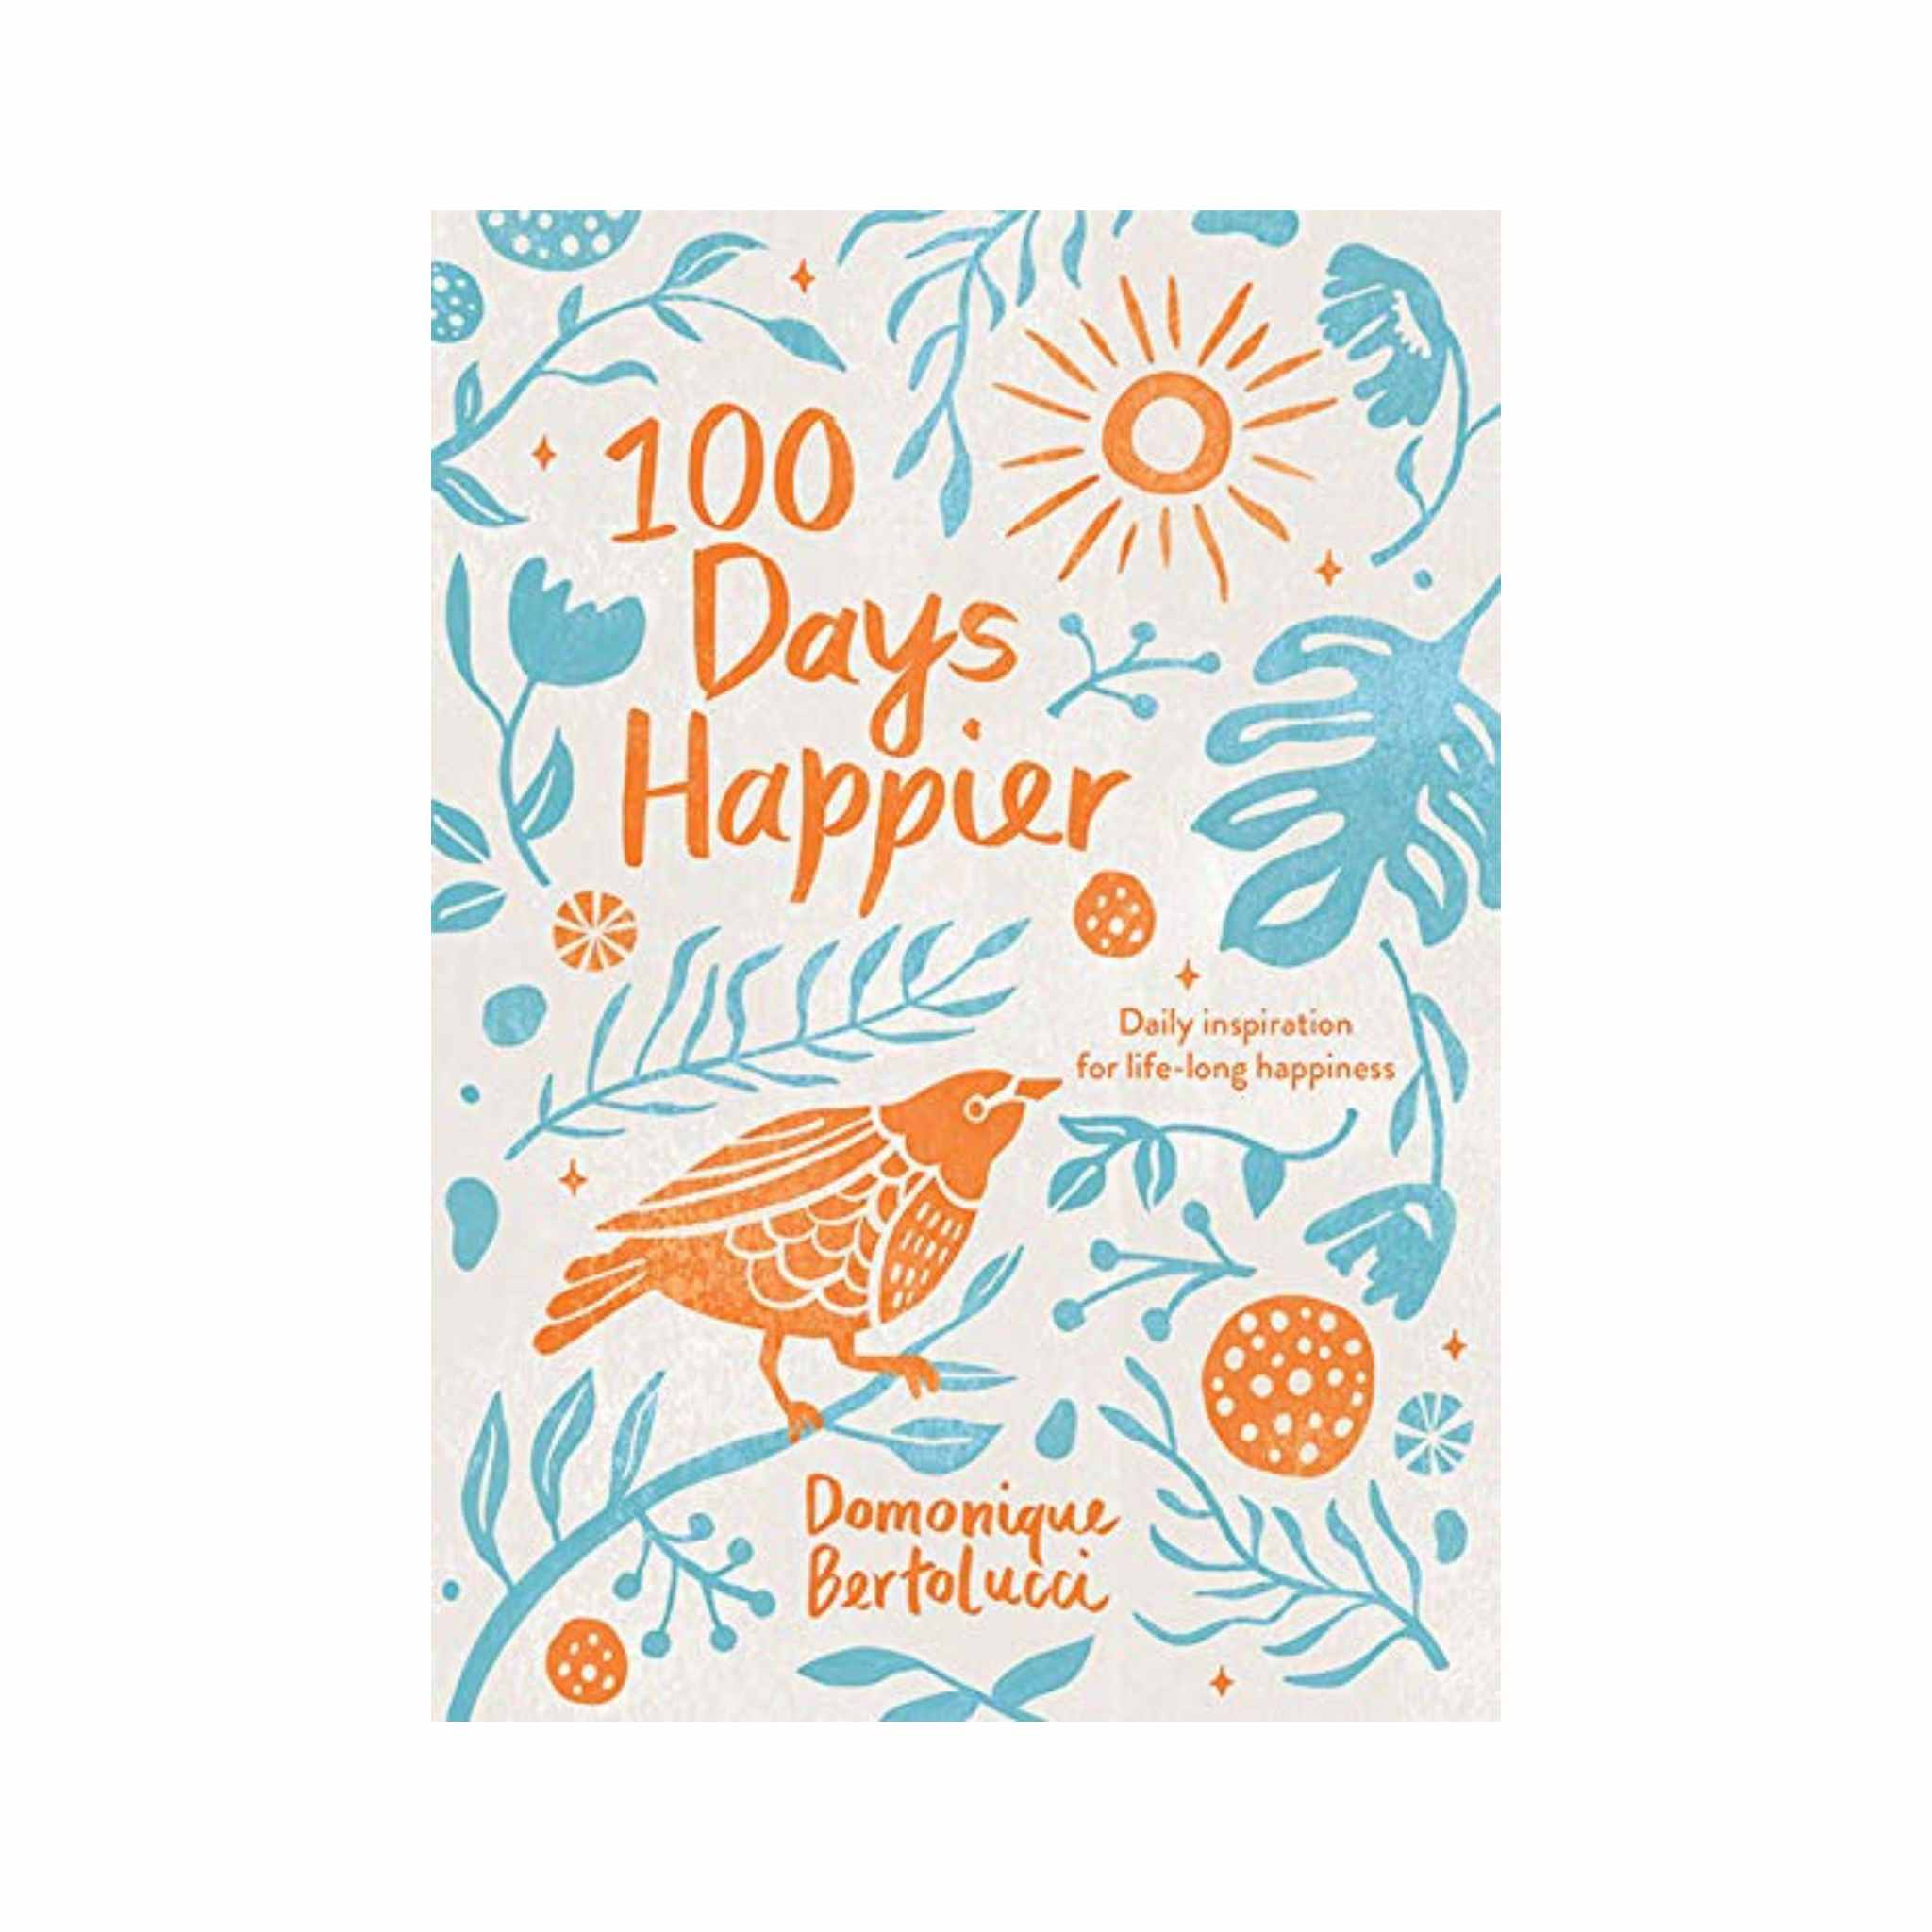 100 Days Happier Book